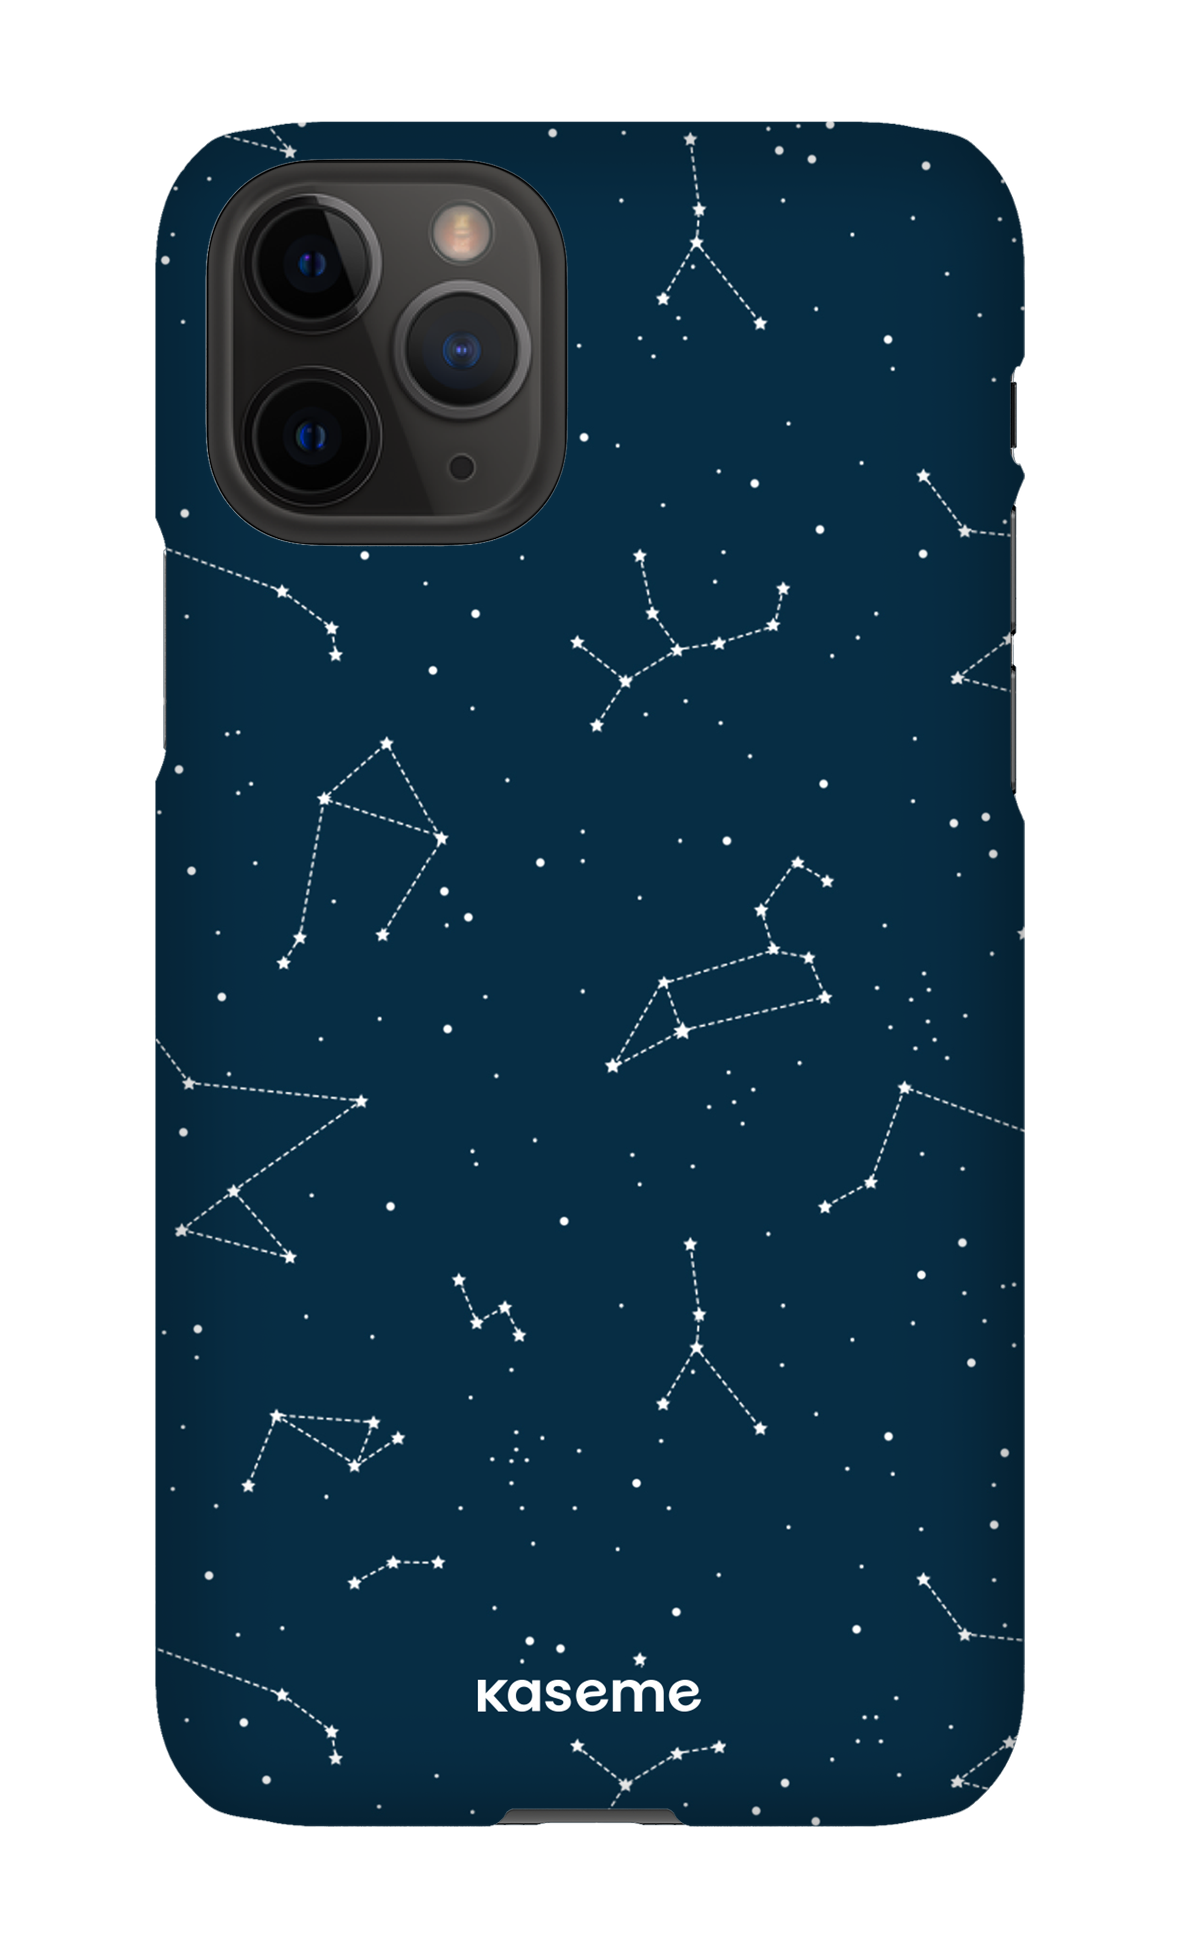 Cosmos - iPhone 11 Pro